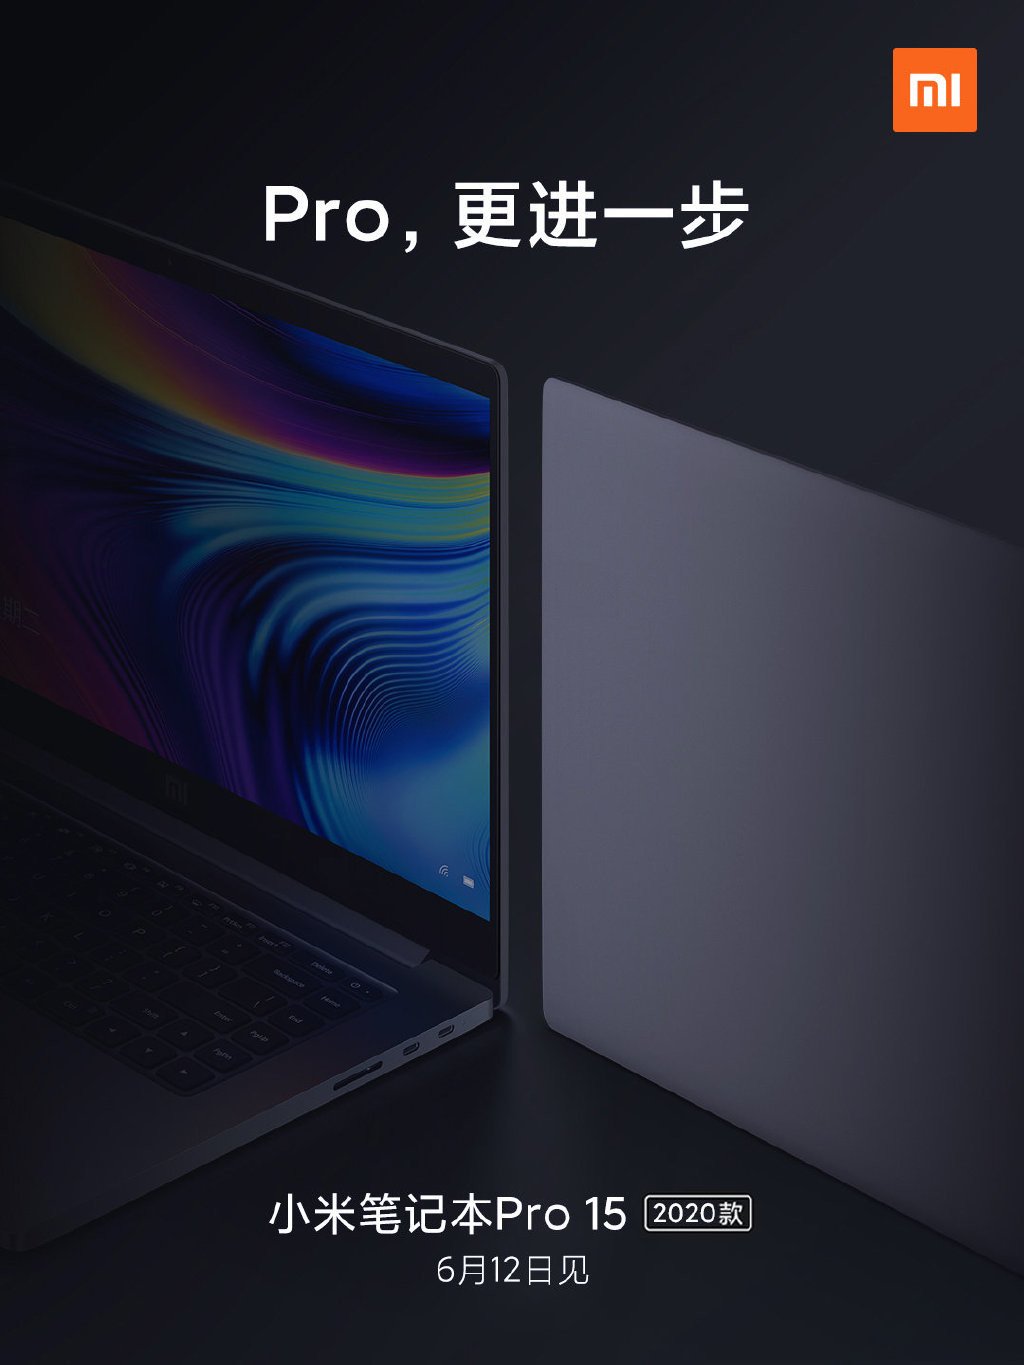 Mi Notebook Pro 15 2020 Poster